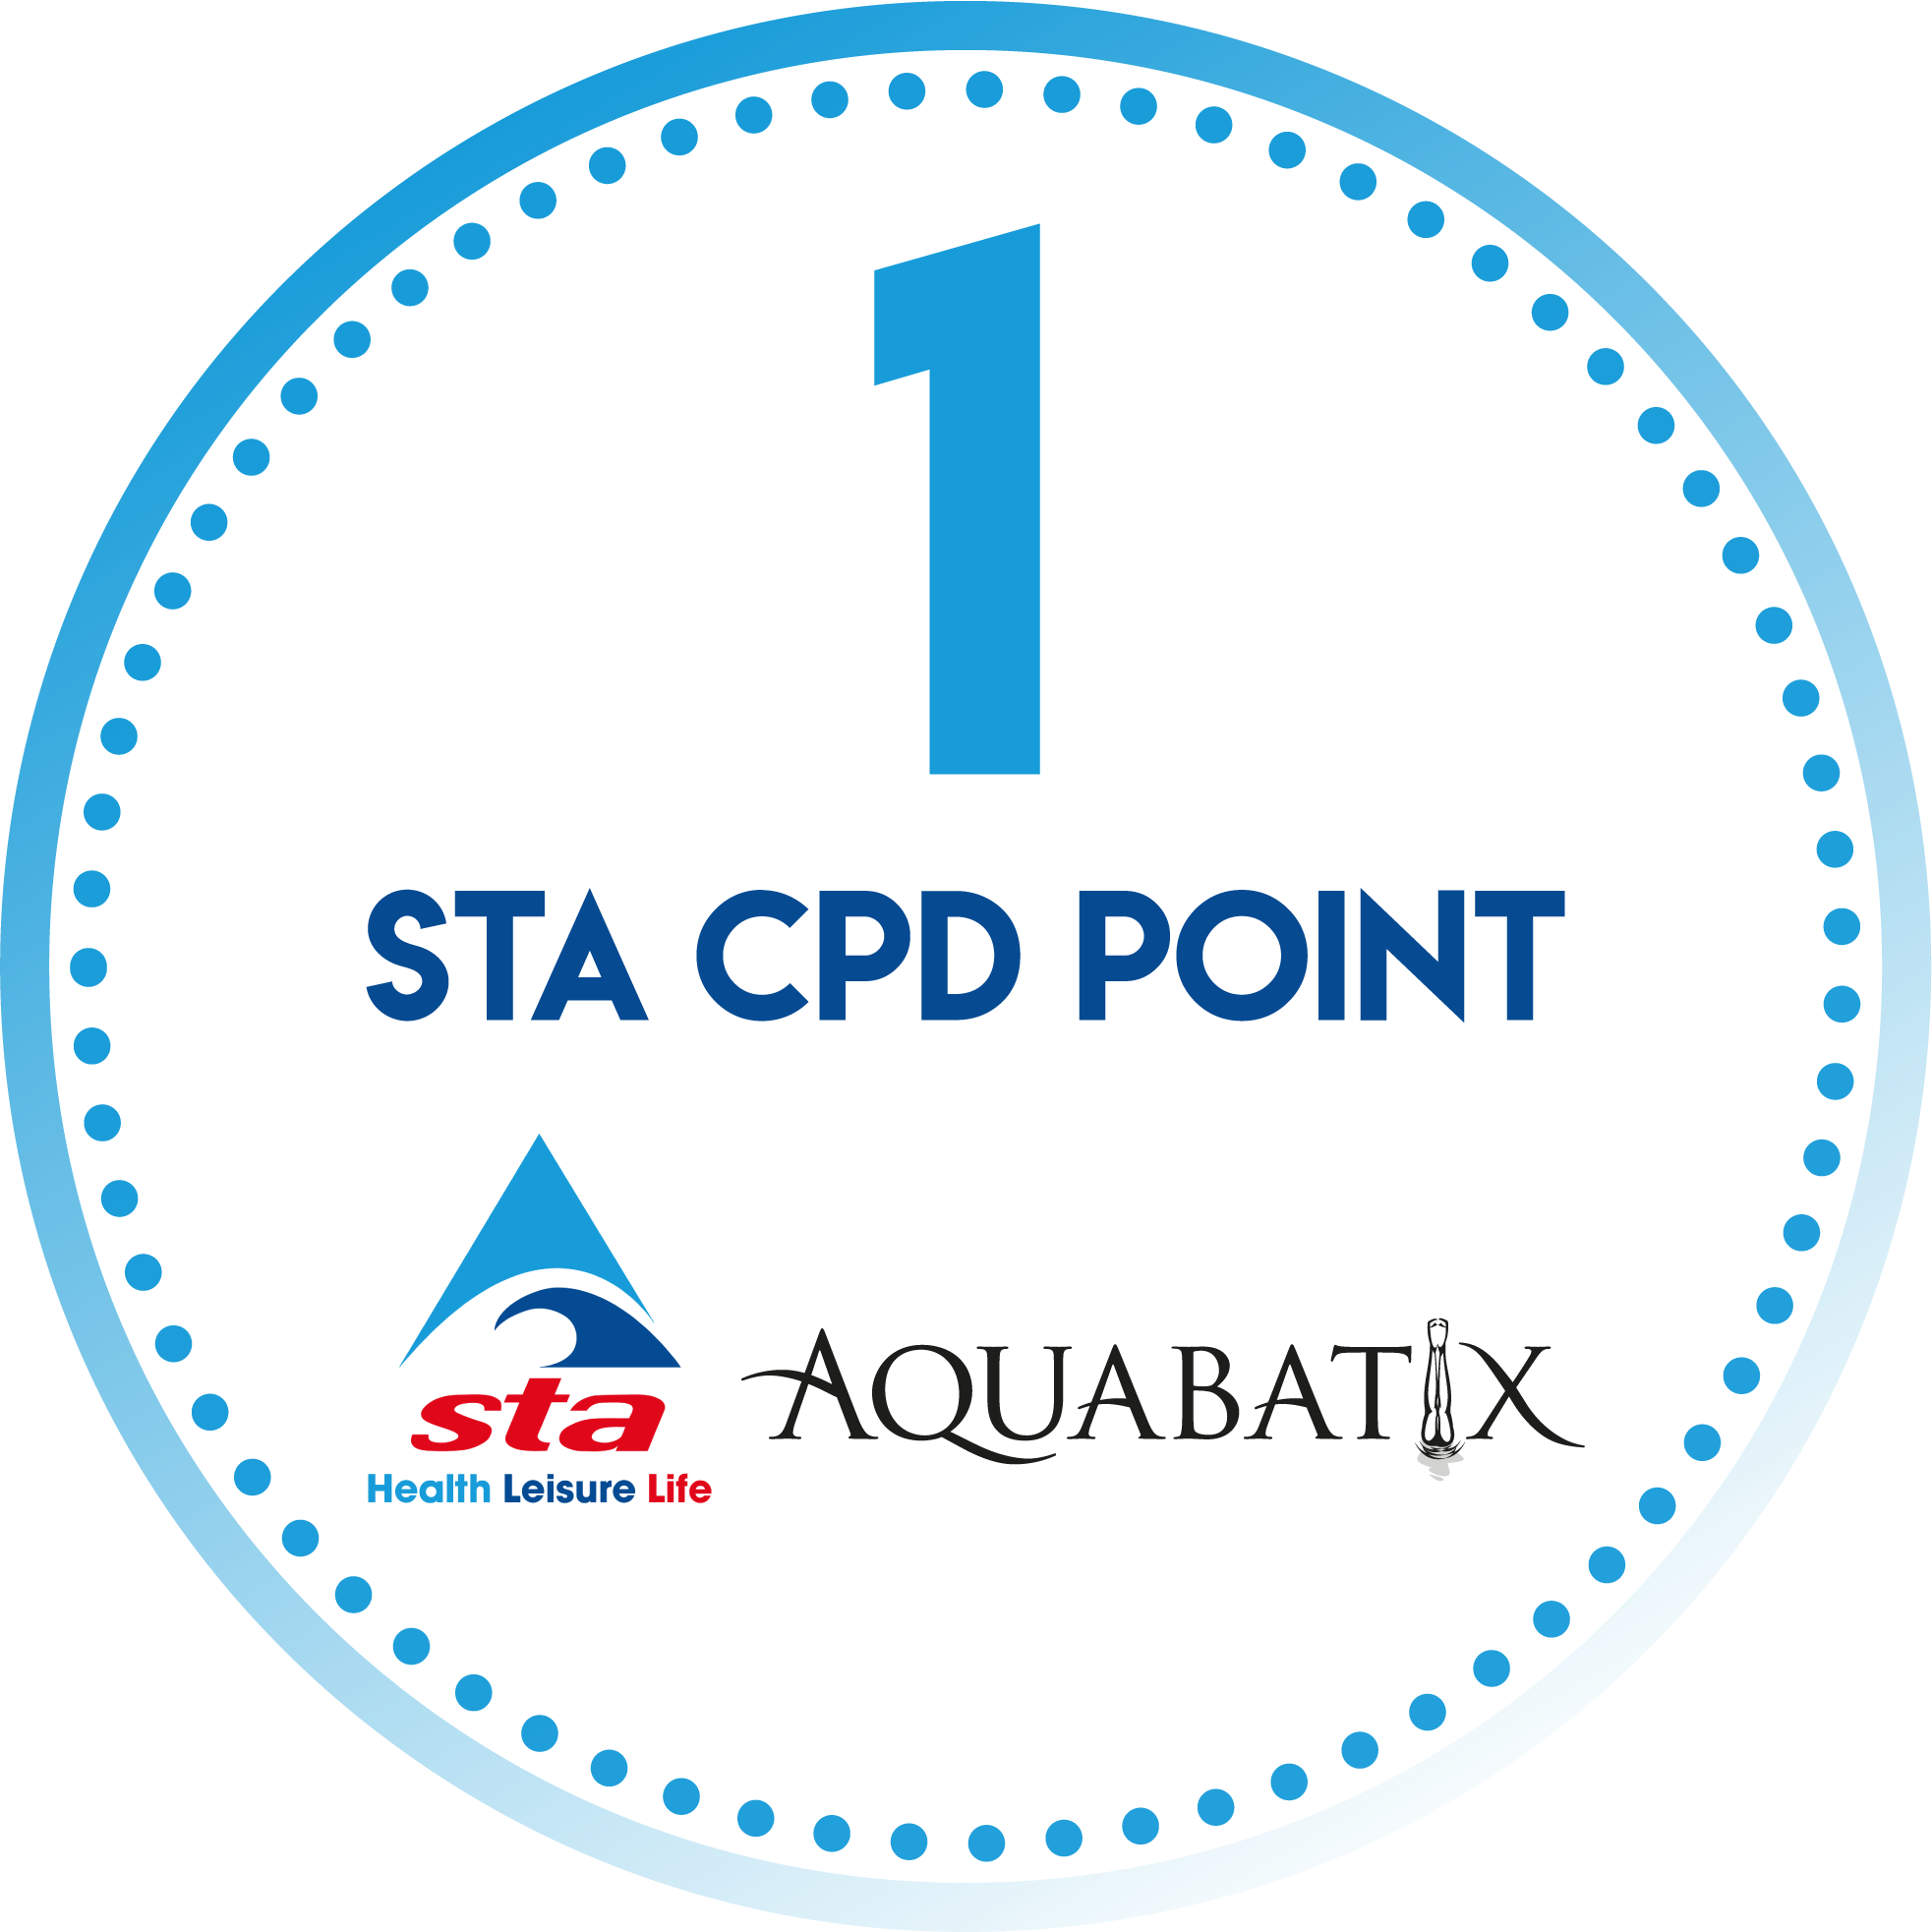 1 Developmental CIMSPA CPD Point